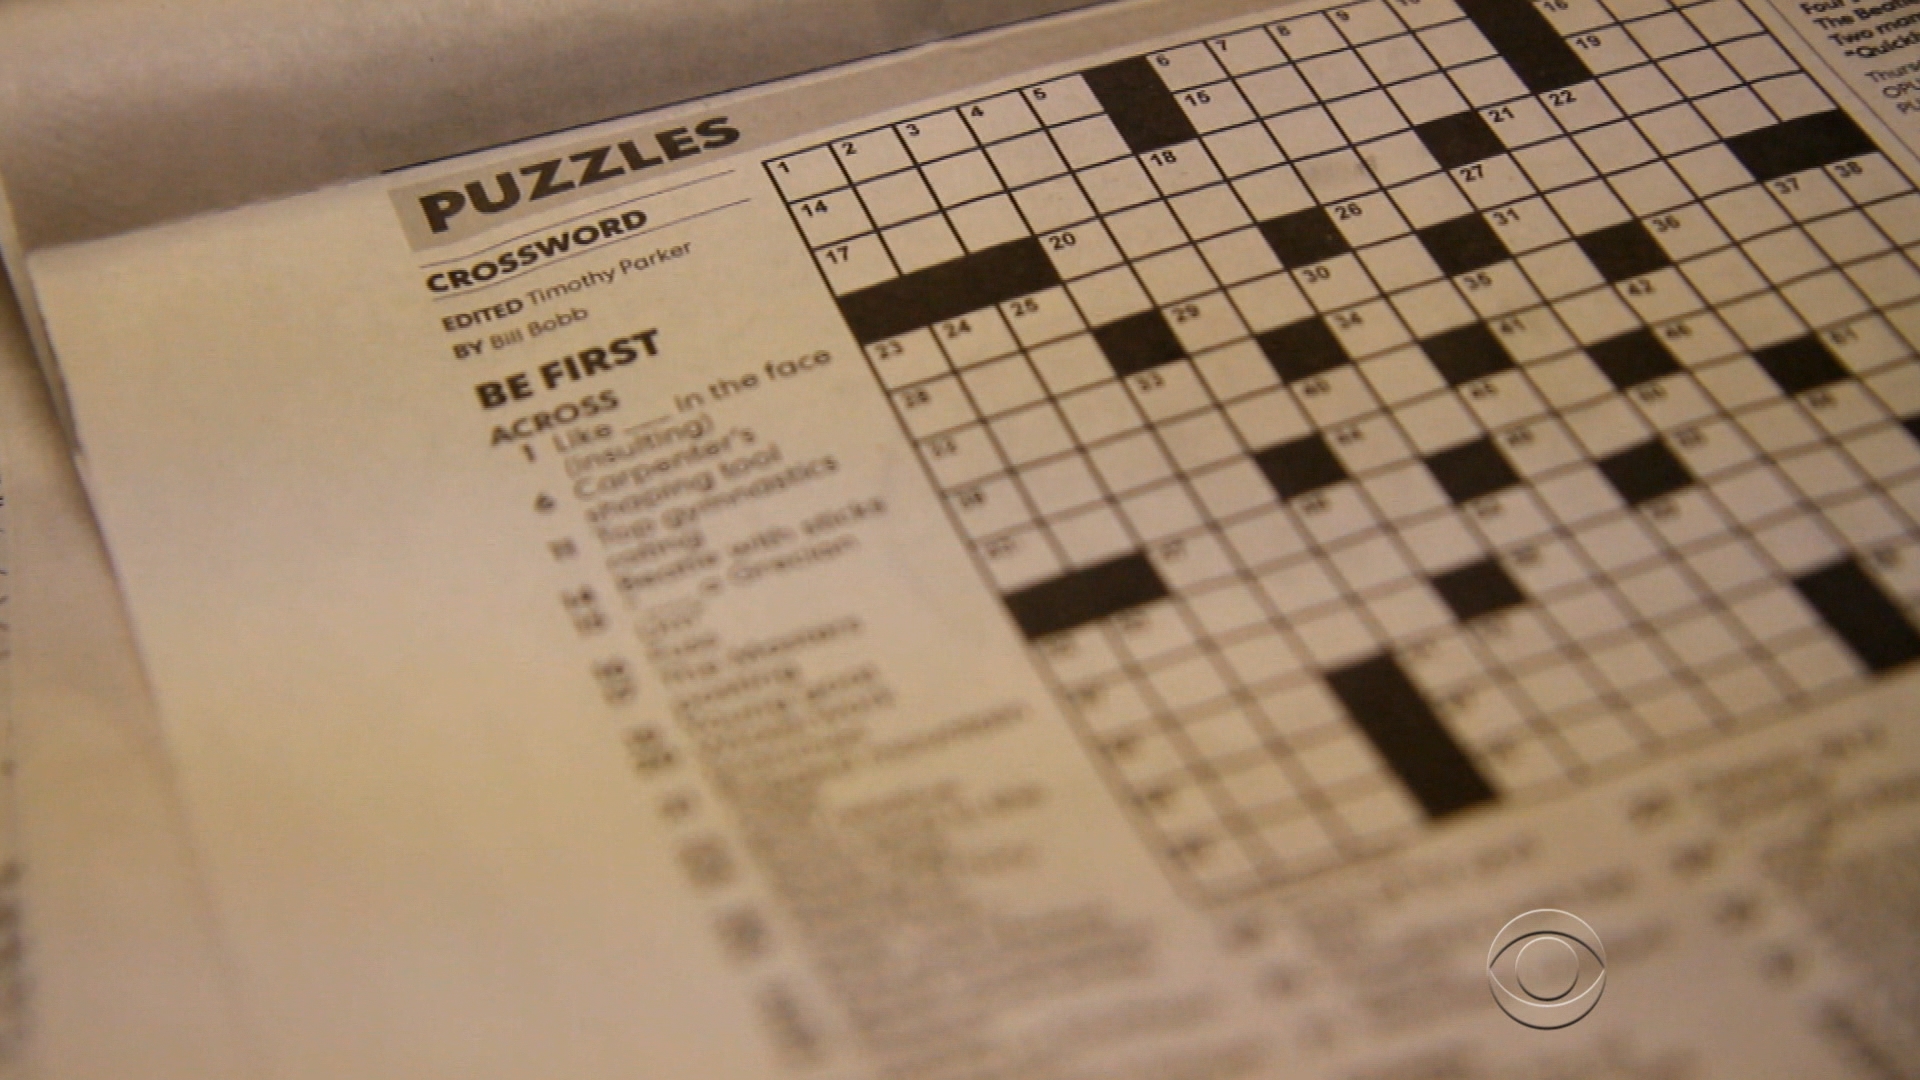 Crossword Puzzle Do Clues Reveal Plagiarism Cbs News